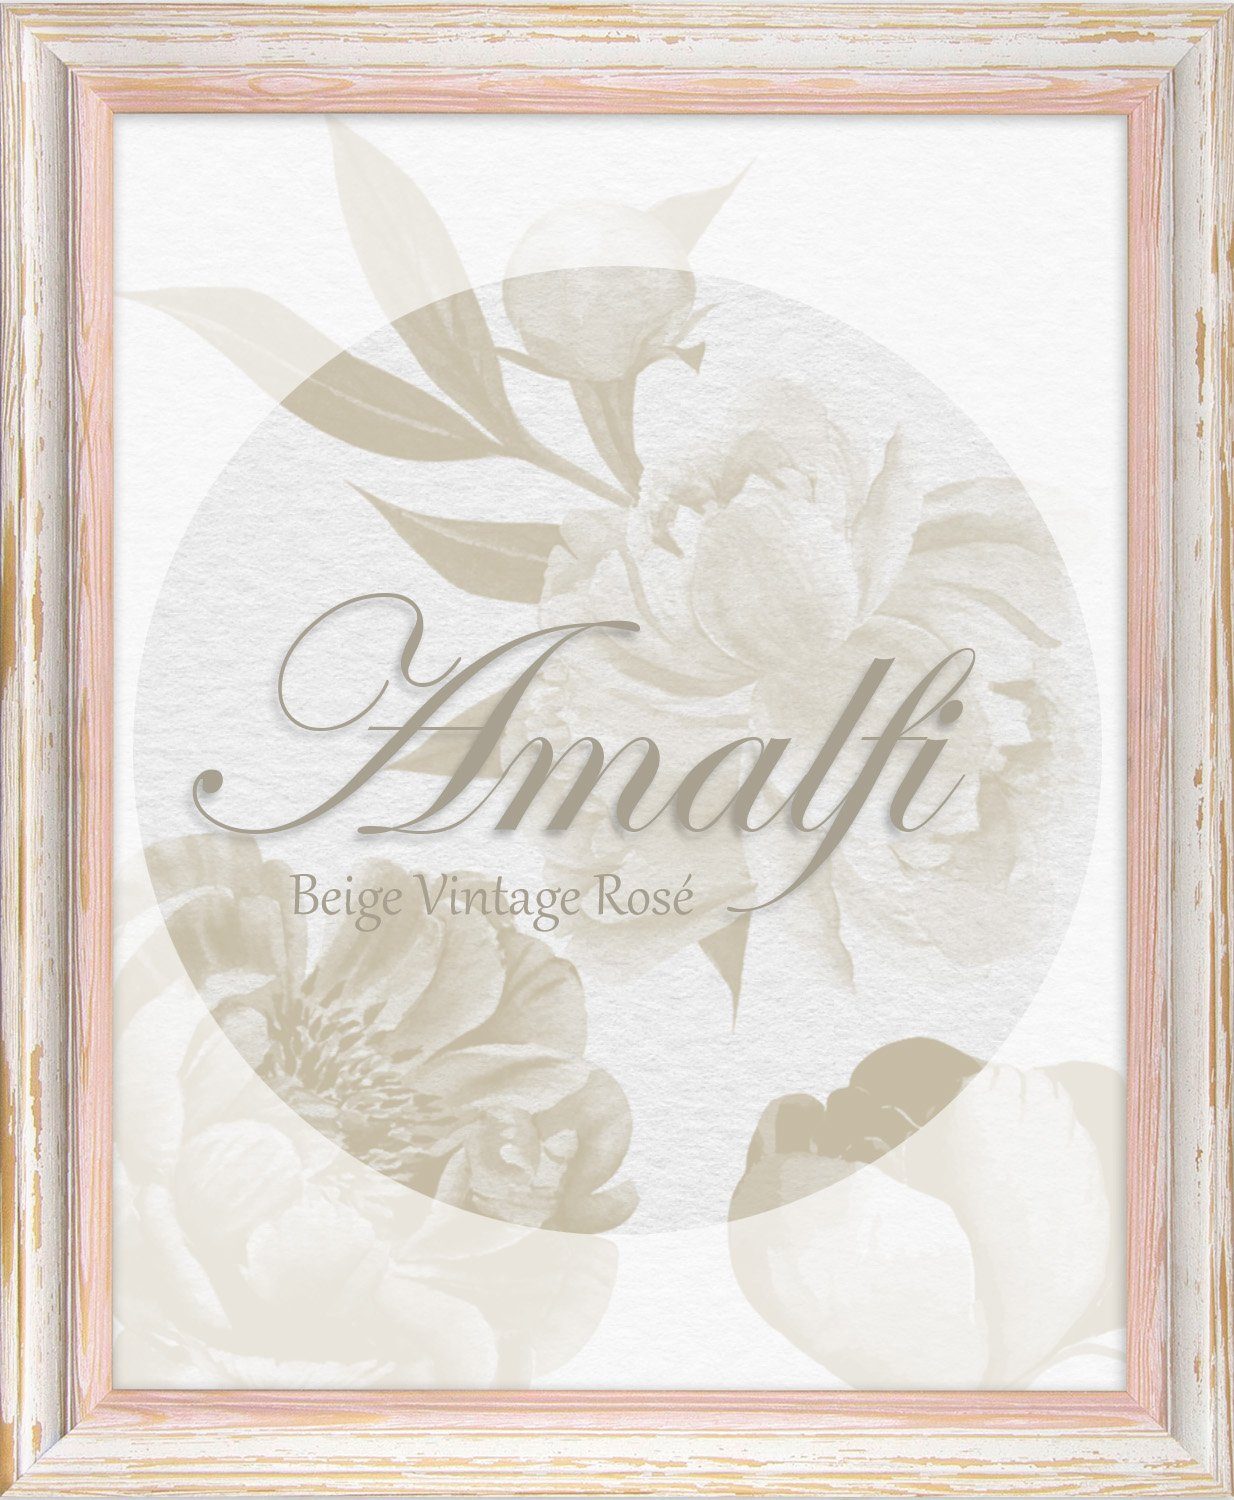 BIRAPA Einzelrahmen Bilderrahmen Amalfi, (1 Stück), 20x20 cm, Rosé Weiß Vintage, Holz